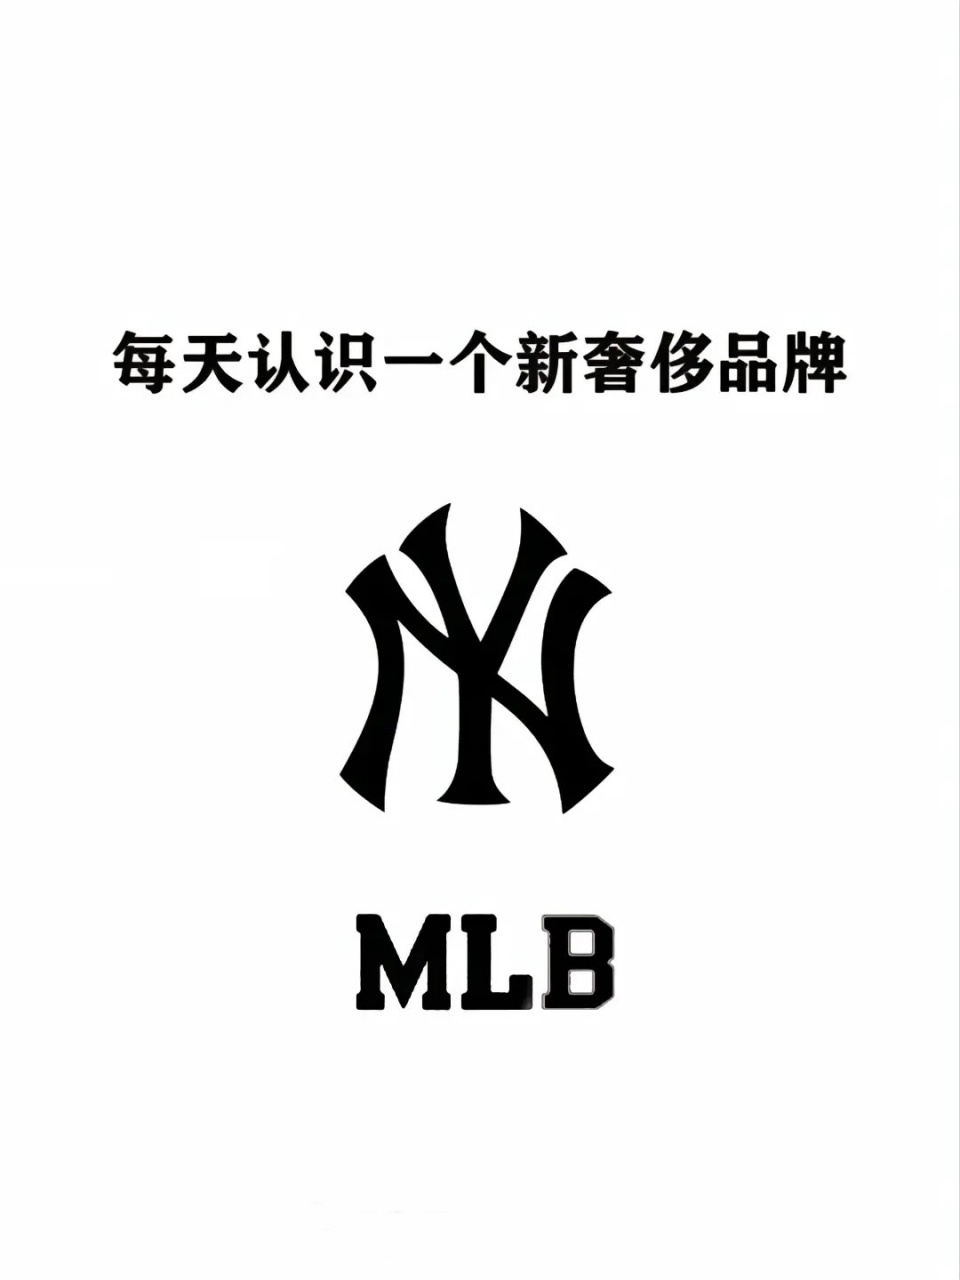 品牌介绍: mlb全称:major league baseball(美国职业棒球队大联盟)